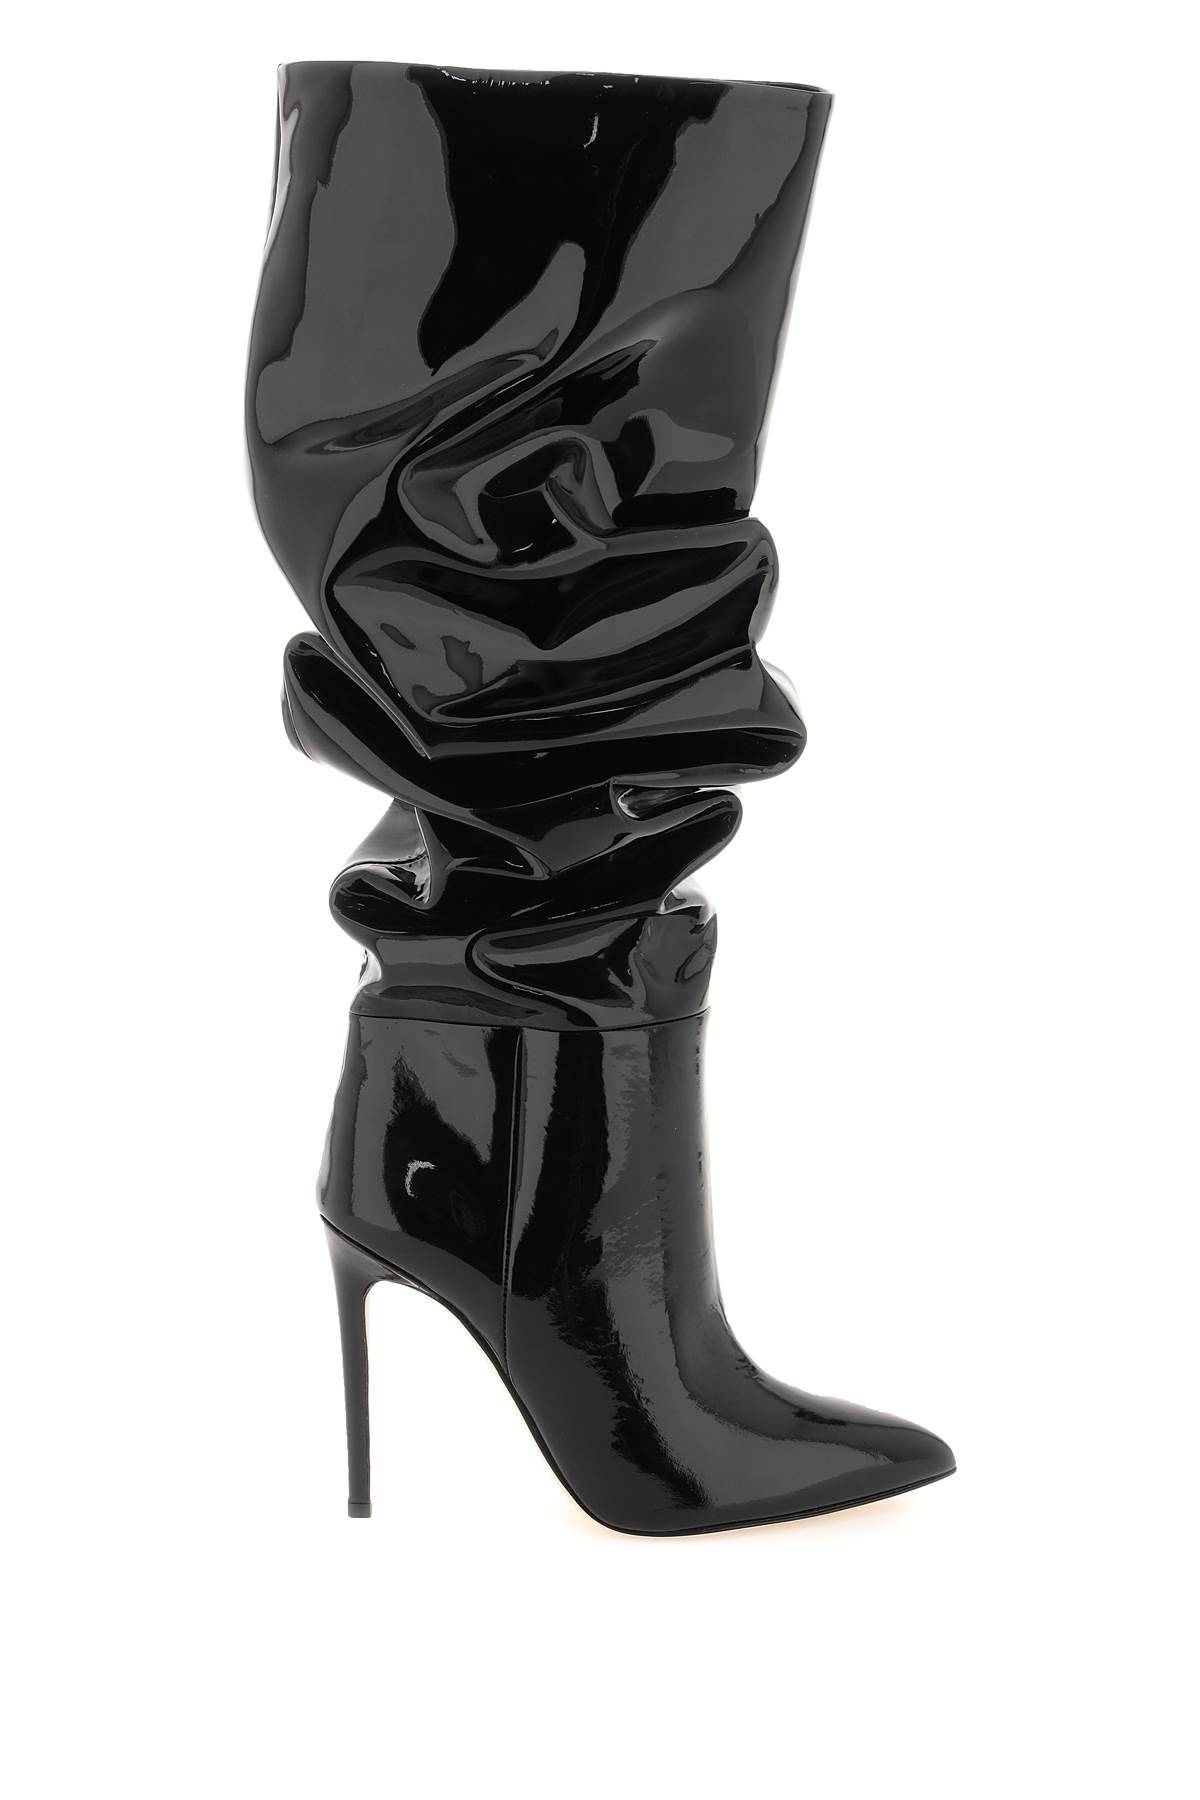 PARIS TEXAS PARIS TEXAS slouchy patent leather stiletto boots